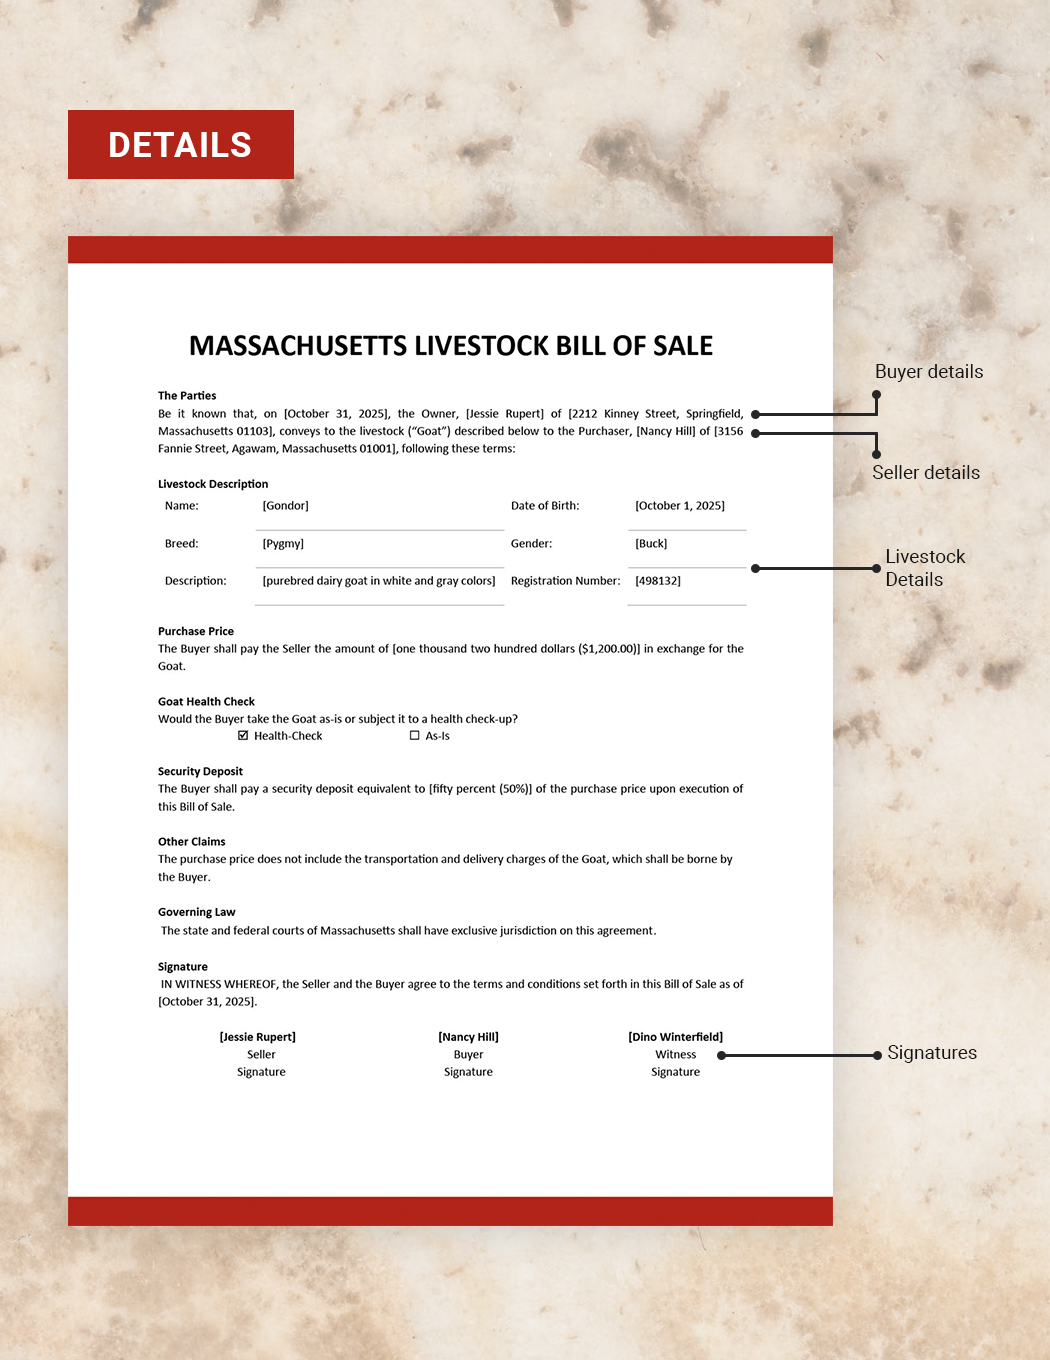 Massachusetts Livestock Bill of Sale Form Template